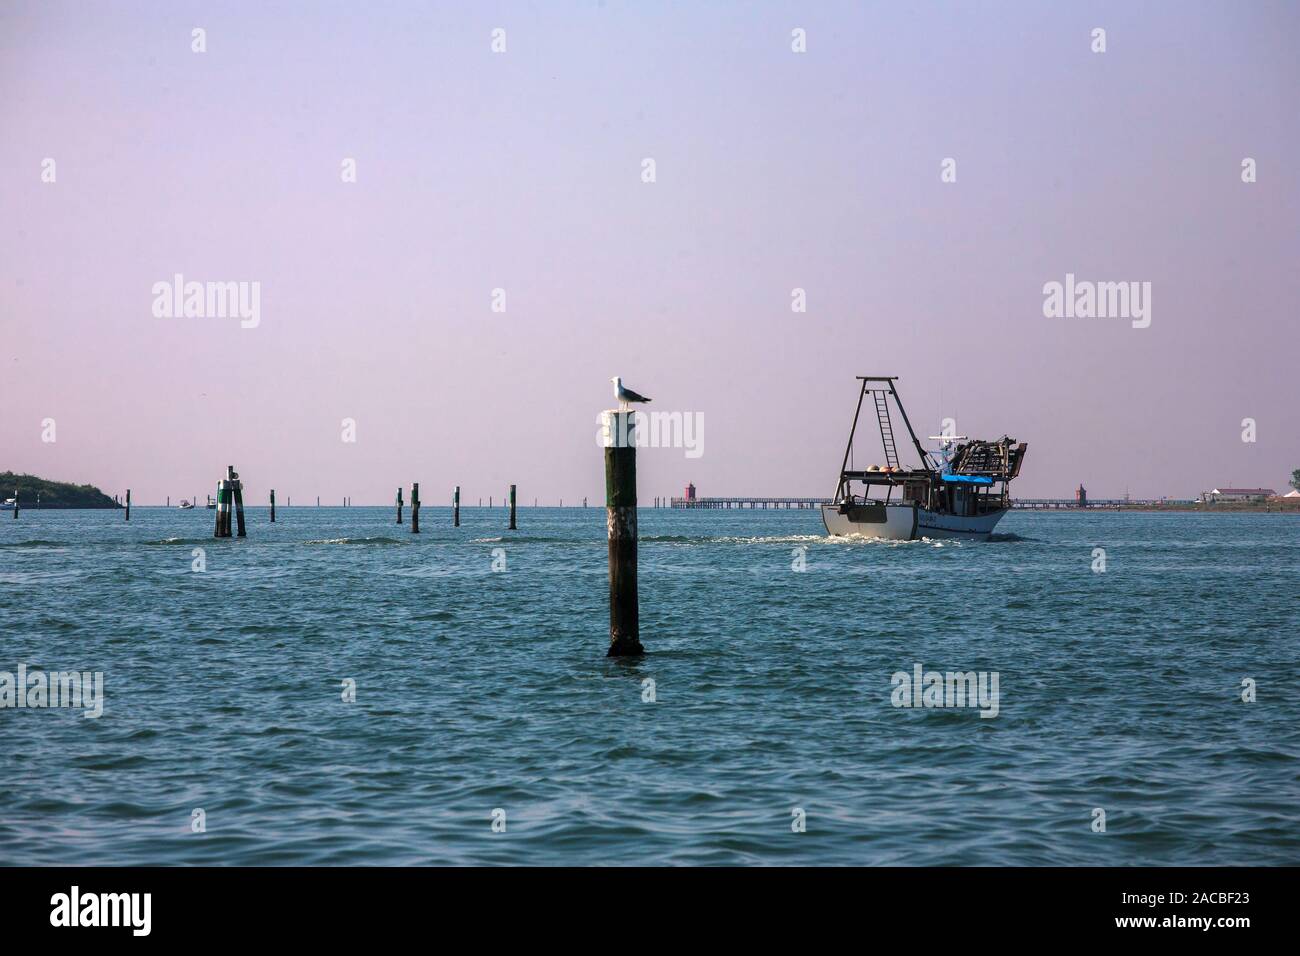 Fishing boat in the Marano Lagunare channed of the Laguna di Marano, Friuli-Venezia Giulia, Italy Stock Photo